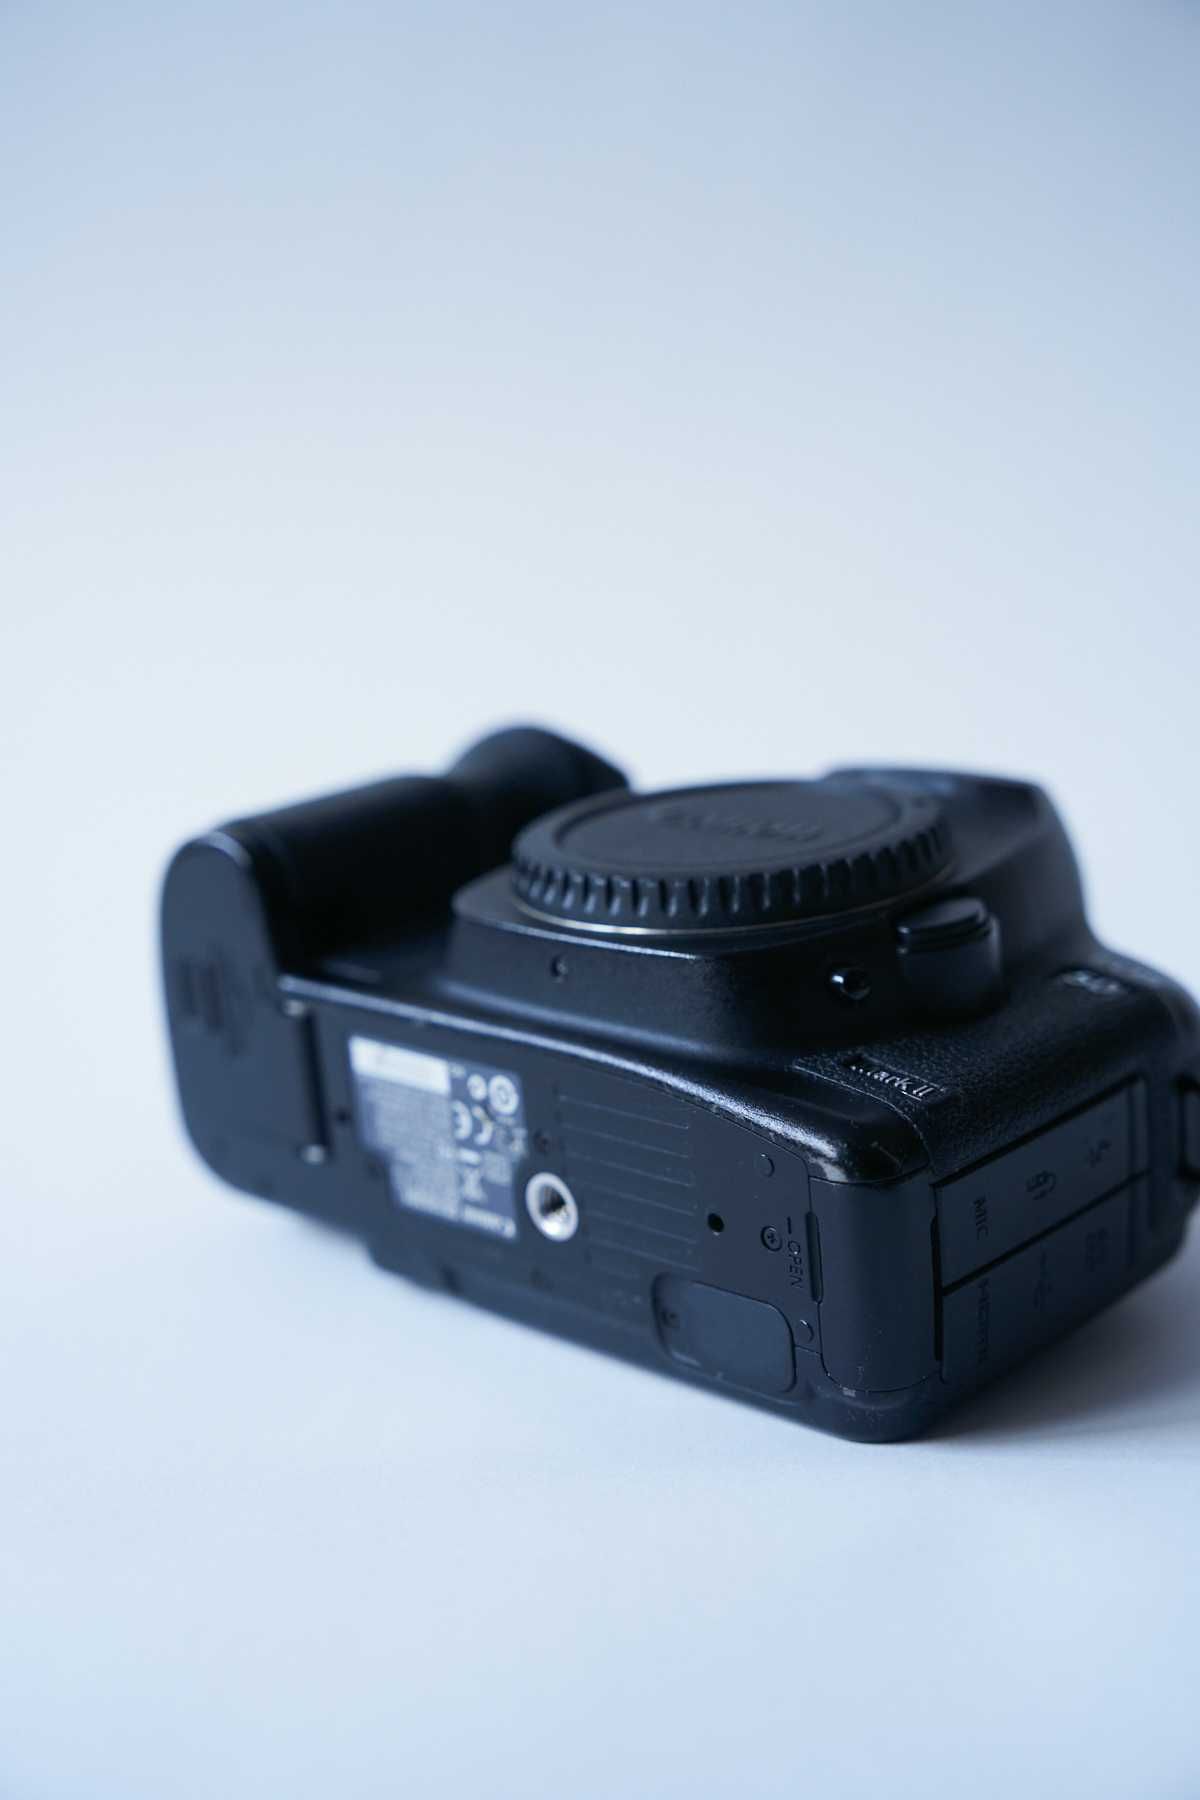 Canon EOS 5D mk II, body, FV